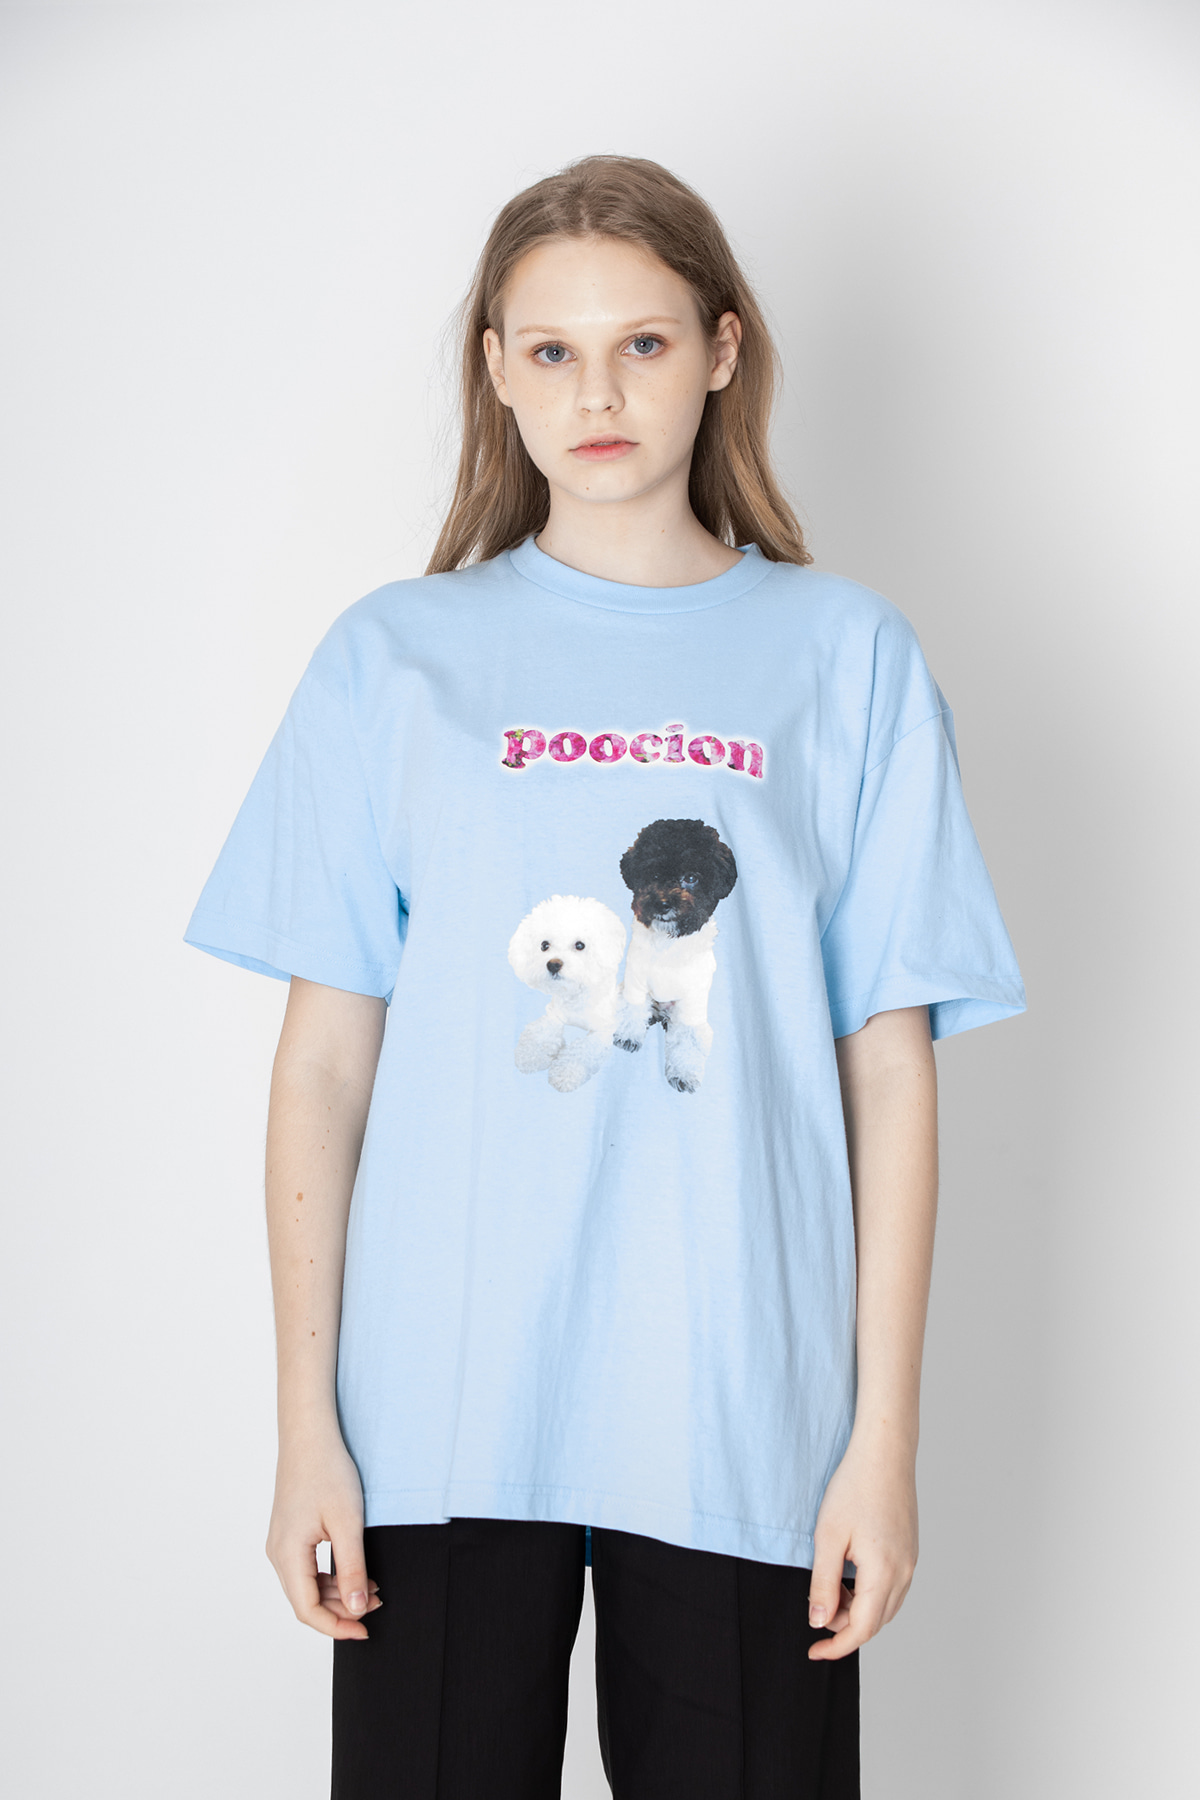 POOCION Twin T-shirt (Sky Blue)